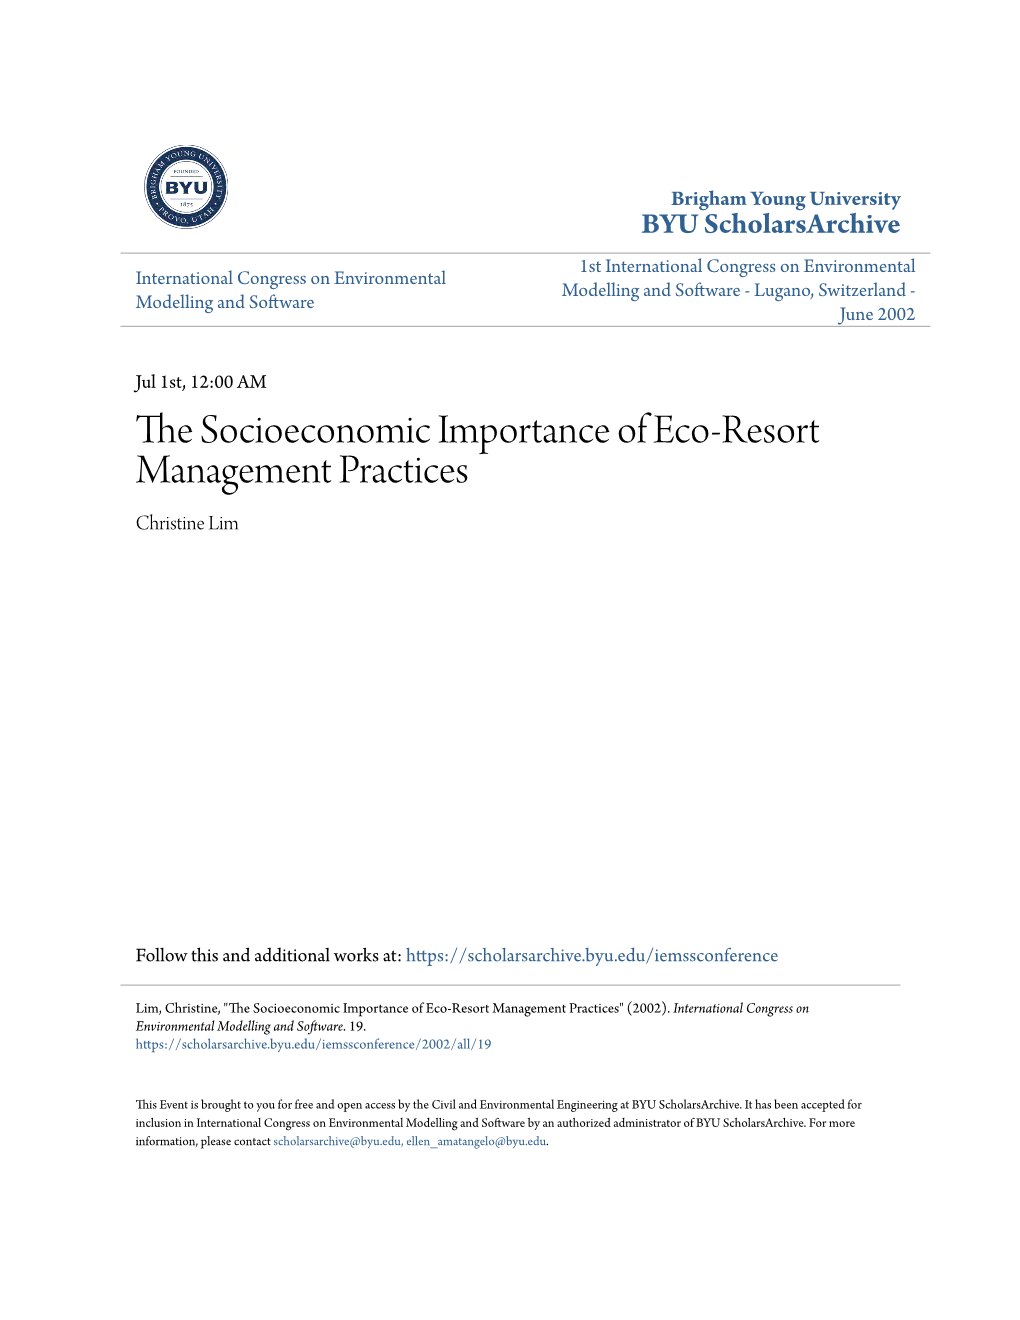 The Socioeconomic Importance of Eco-Resort Management Practices